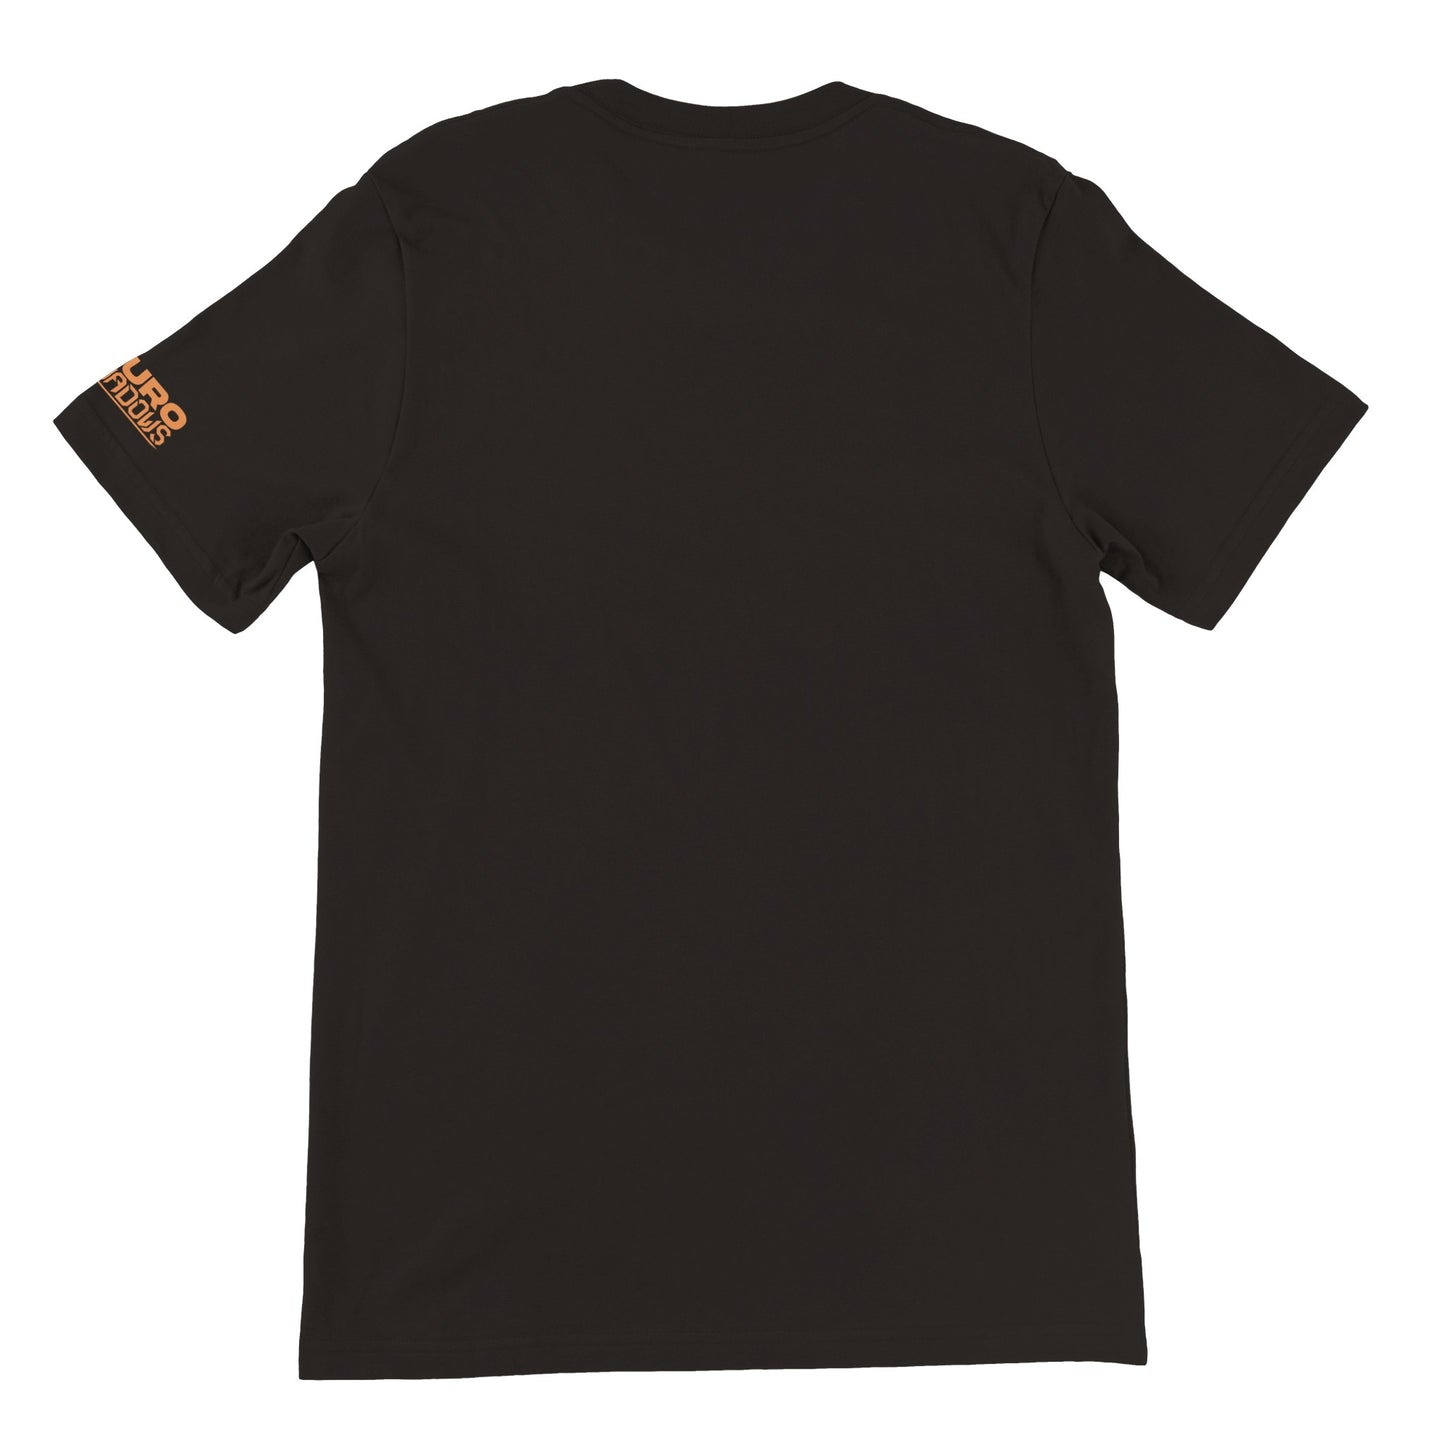 KURO SHADOWS "Hail Odin" Premium Unisex Crewneck T-shirt